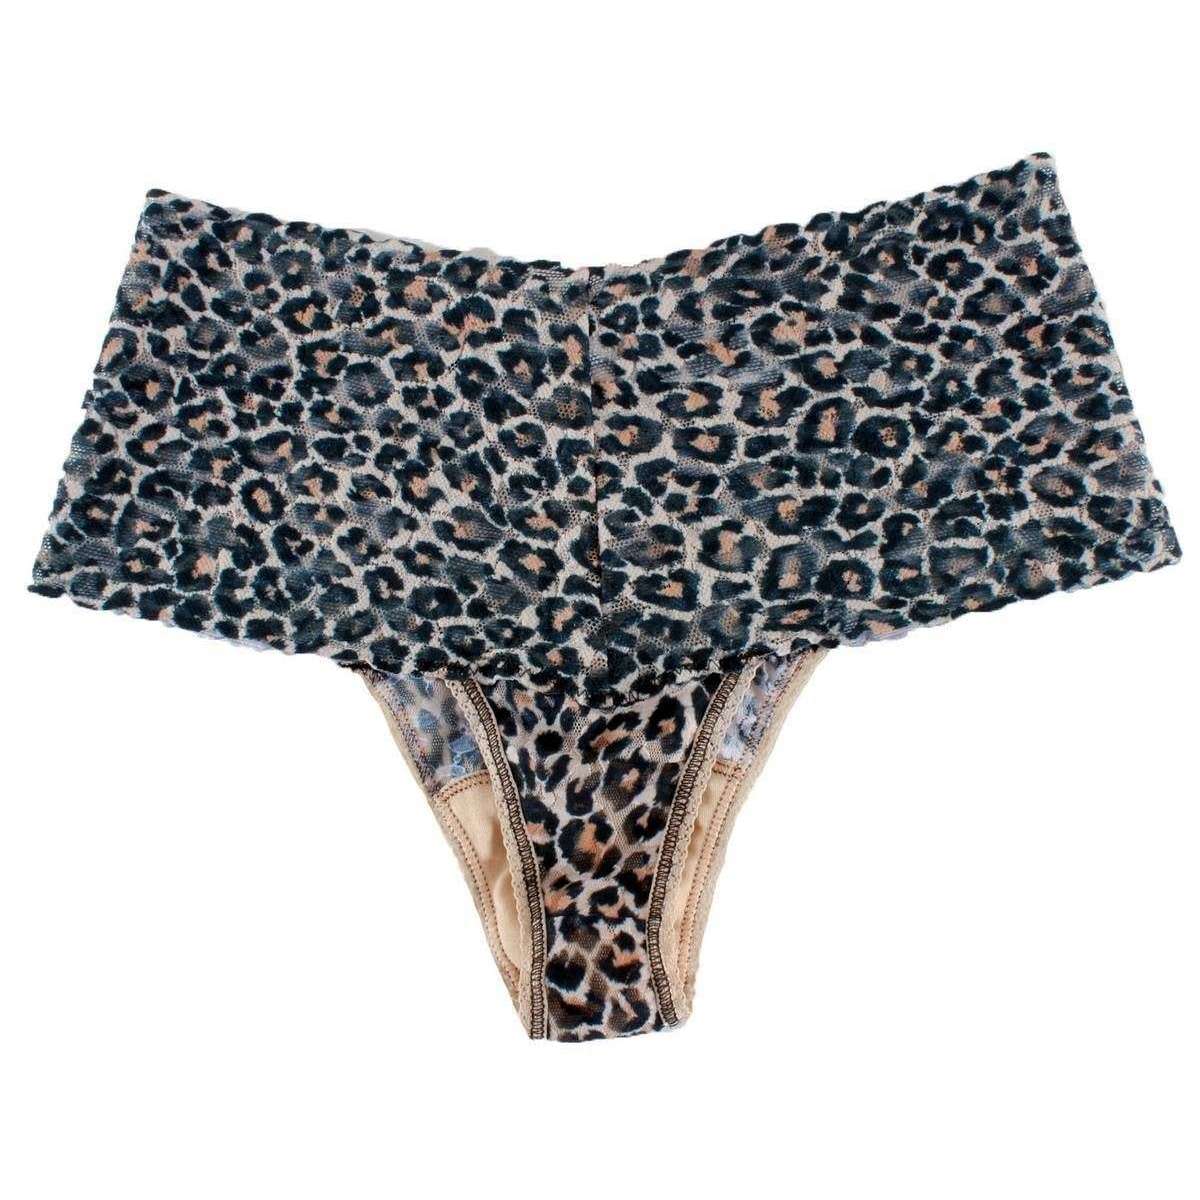 Hanky Panky Retro Lace Leopard Thong - Brown/Black